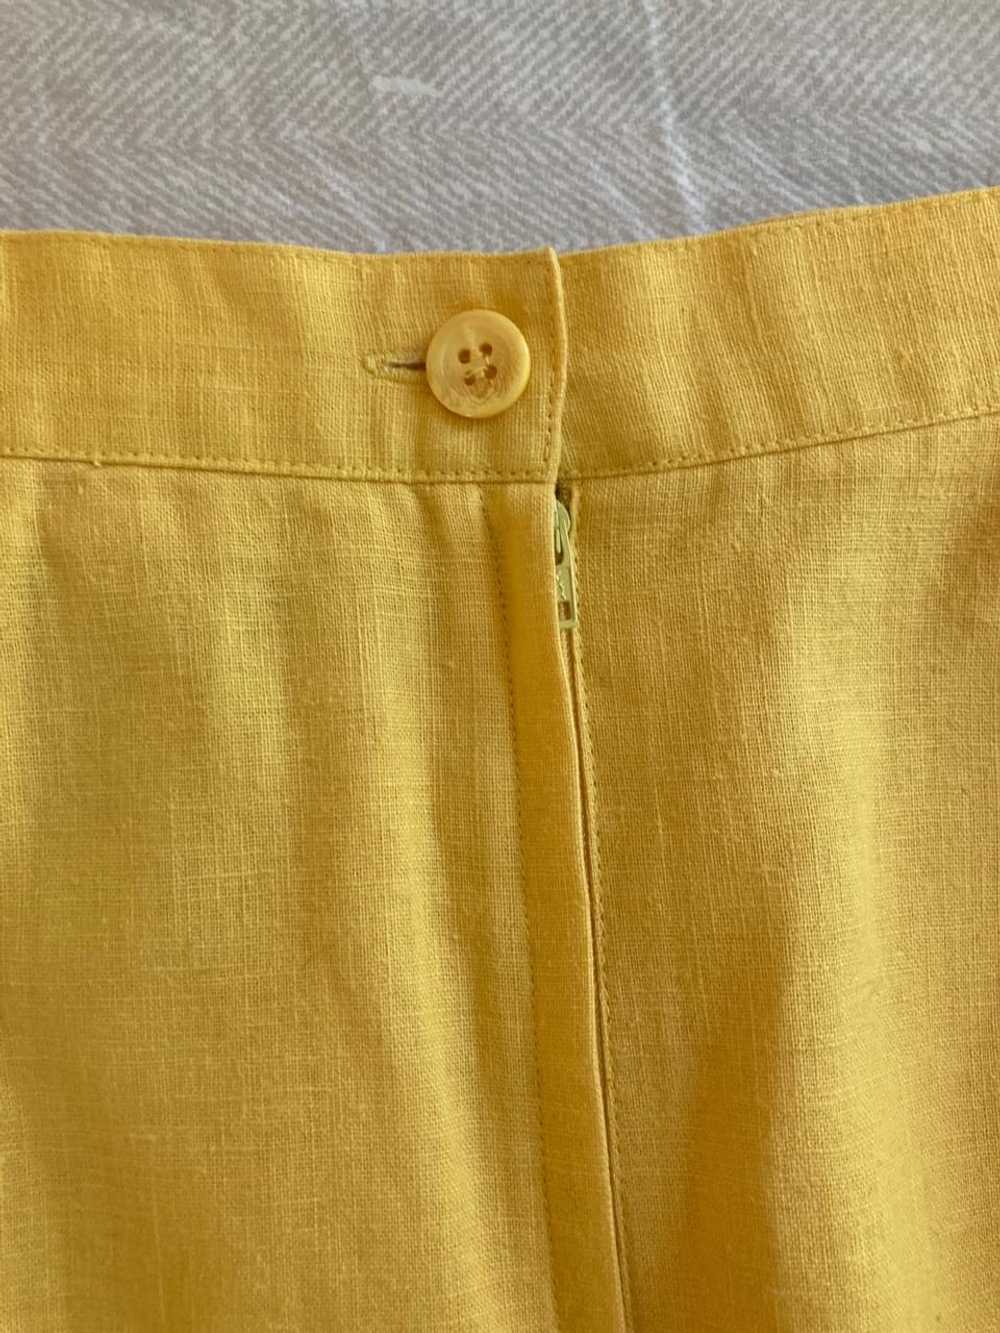 Savannah Yellow high-waisted pencil skirt (10) - image 6